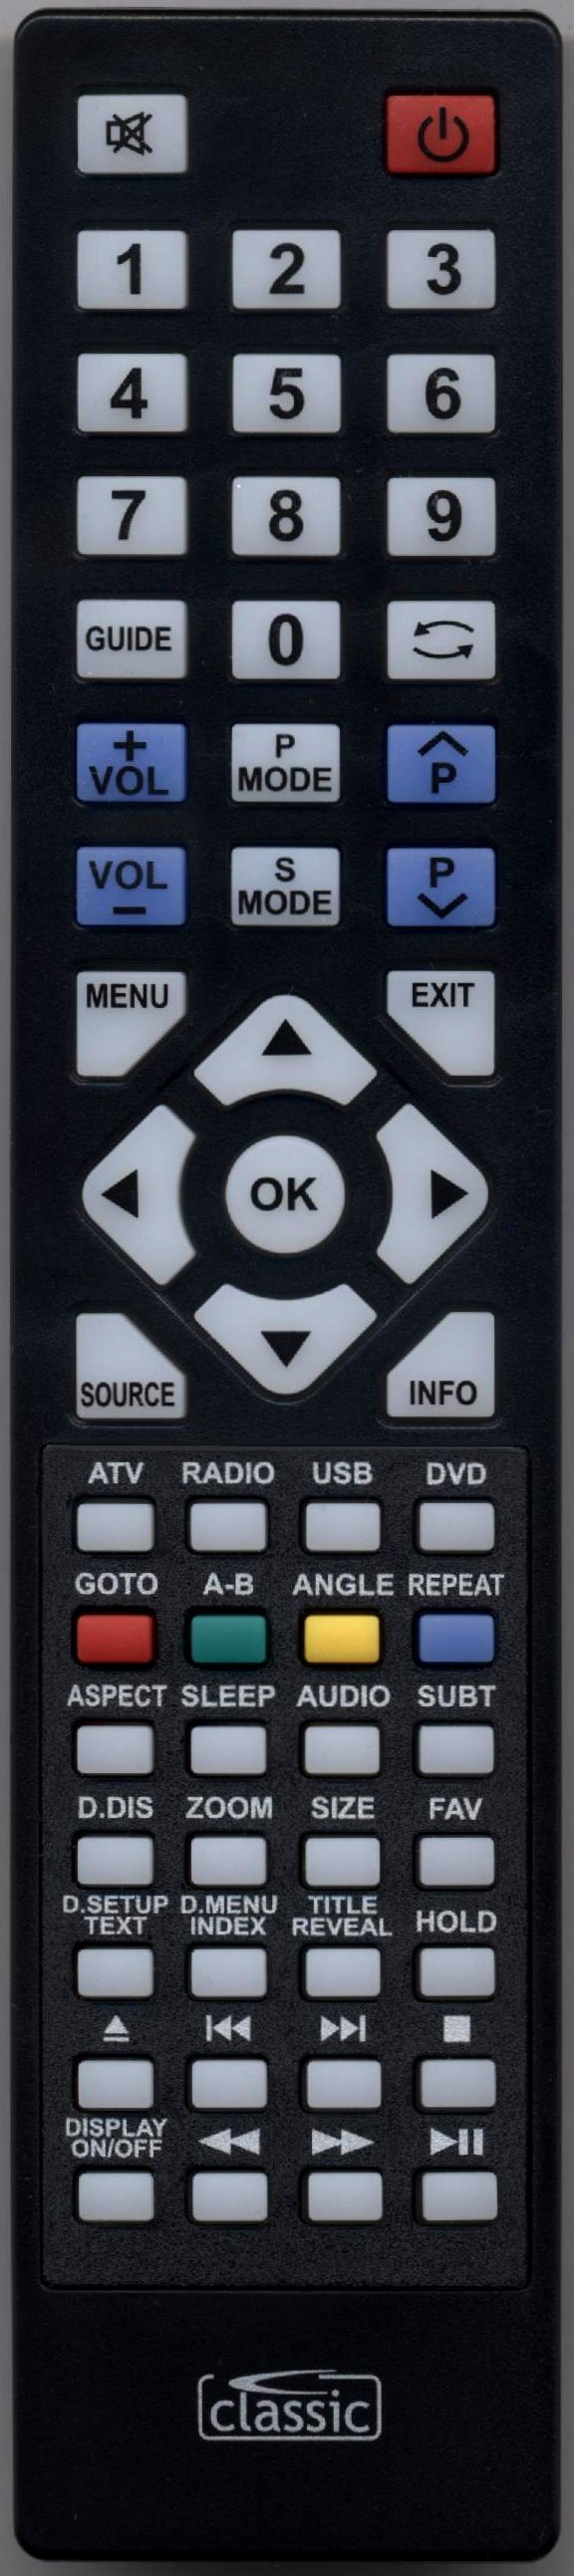 UMC - X26/56G Alternative Remote Control